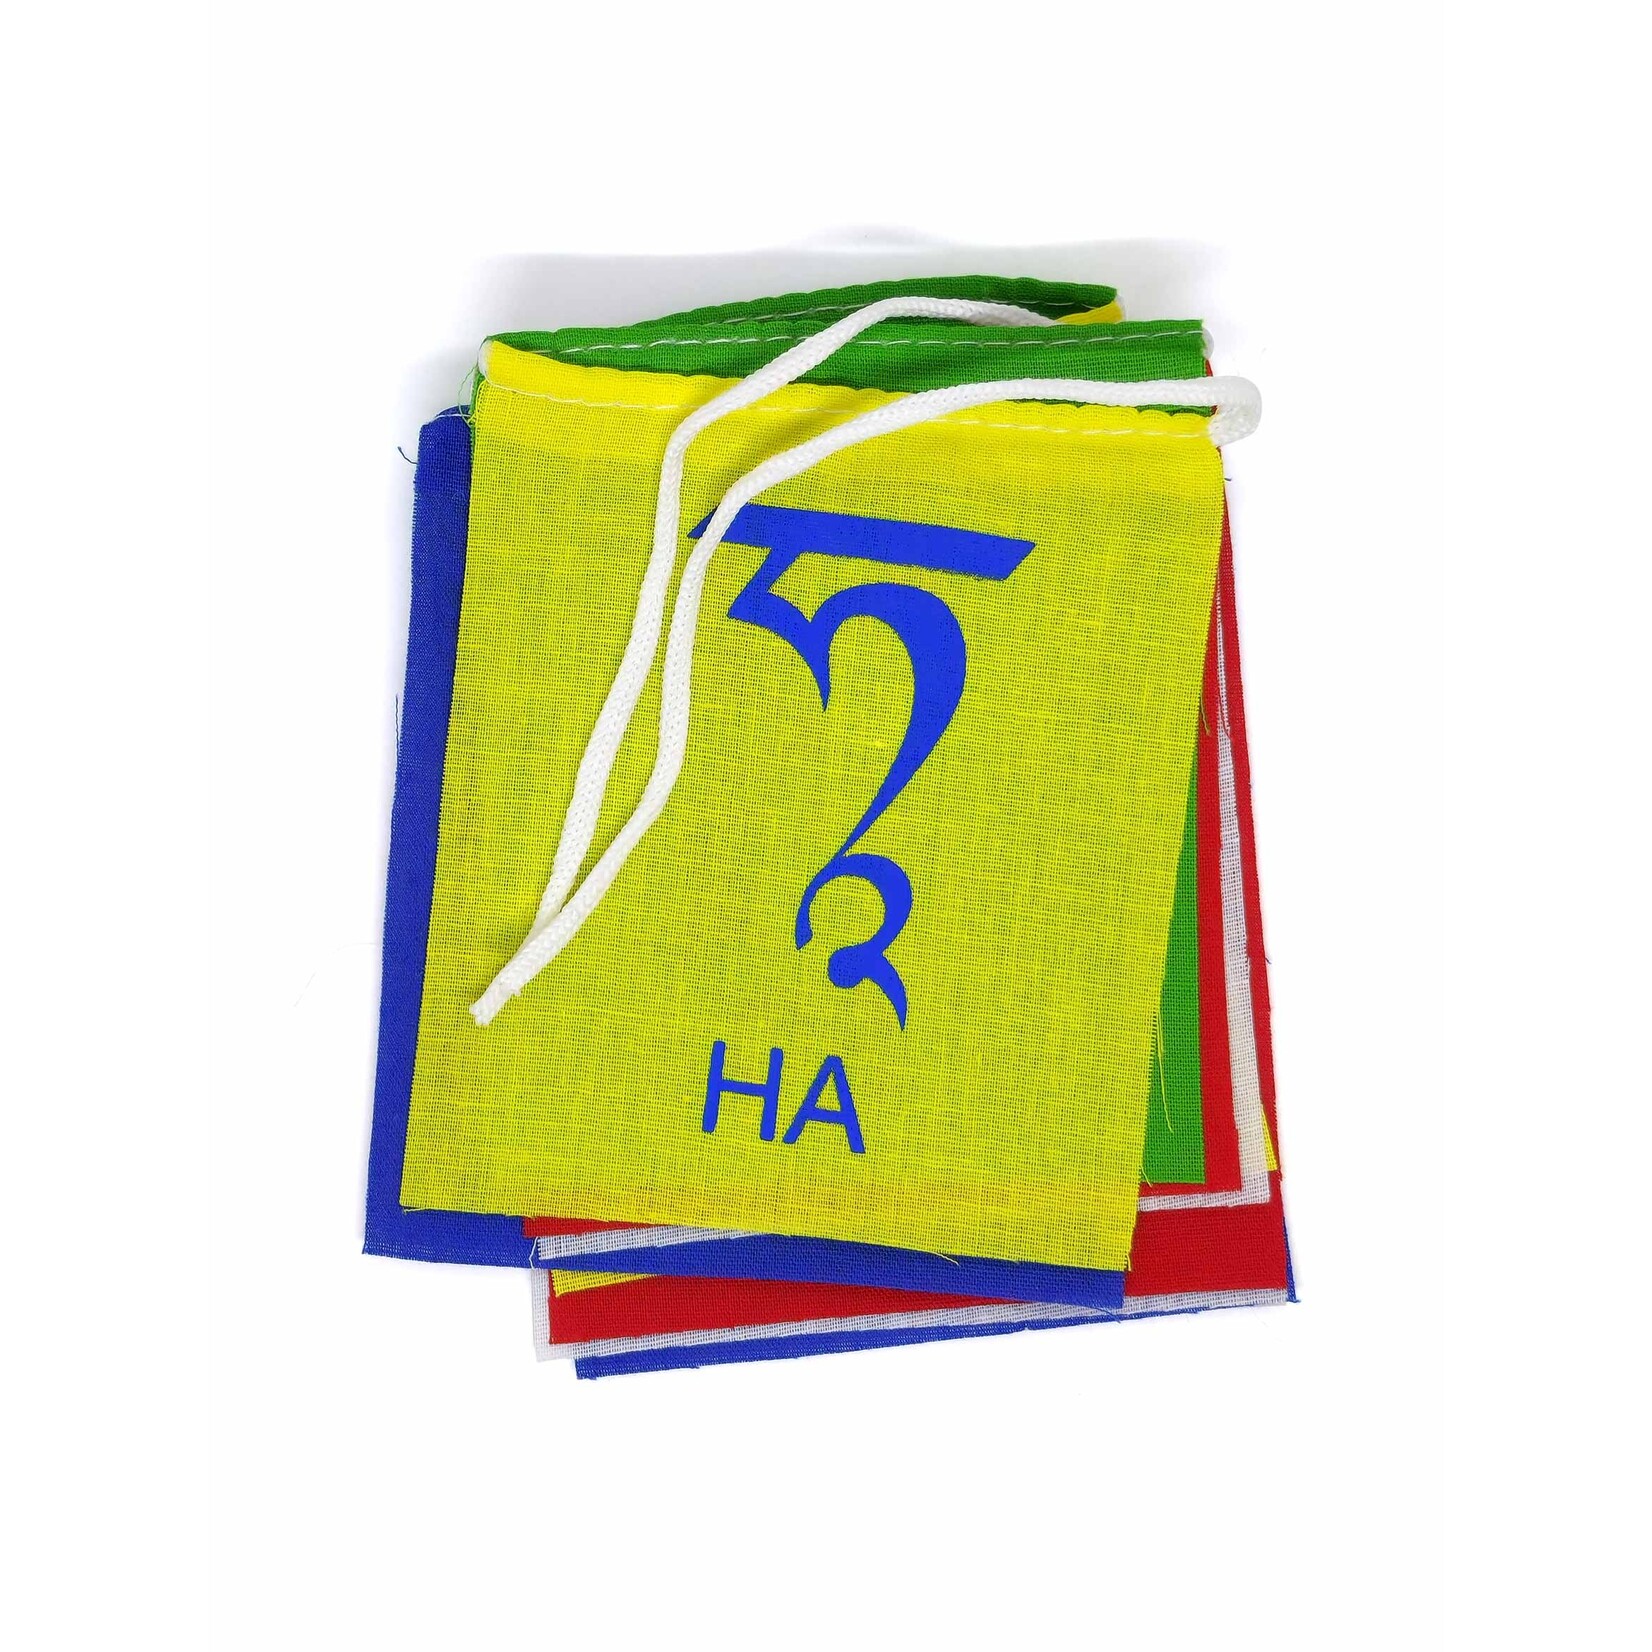 Tibetan Prayer Flag Tara Mantra, 9 x 10.5 cm